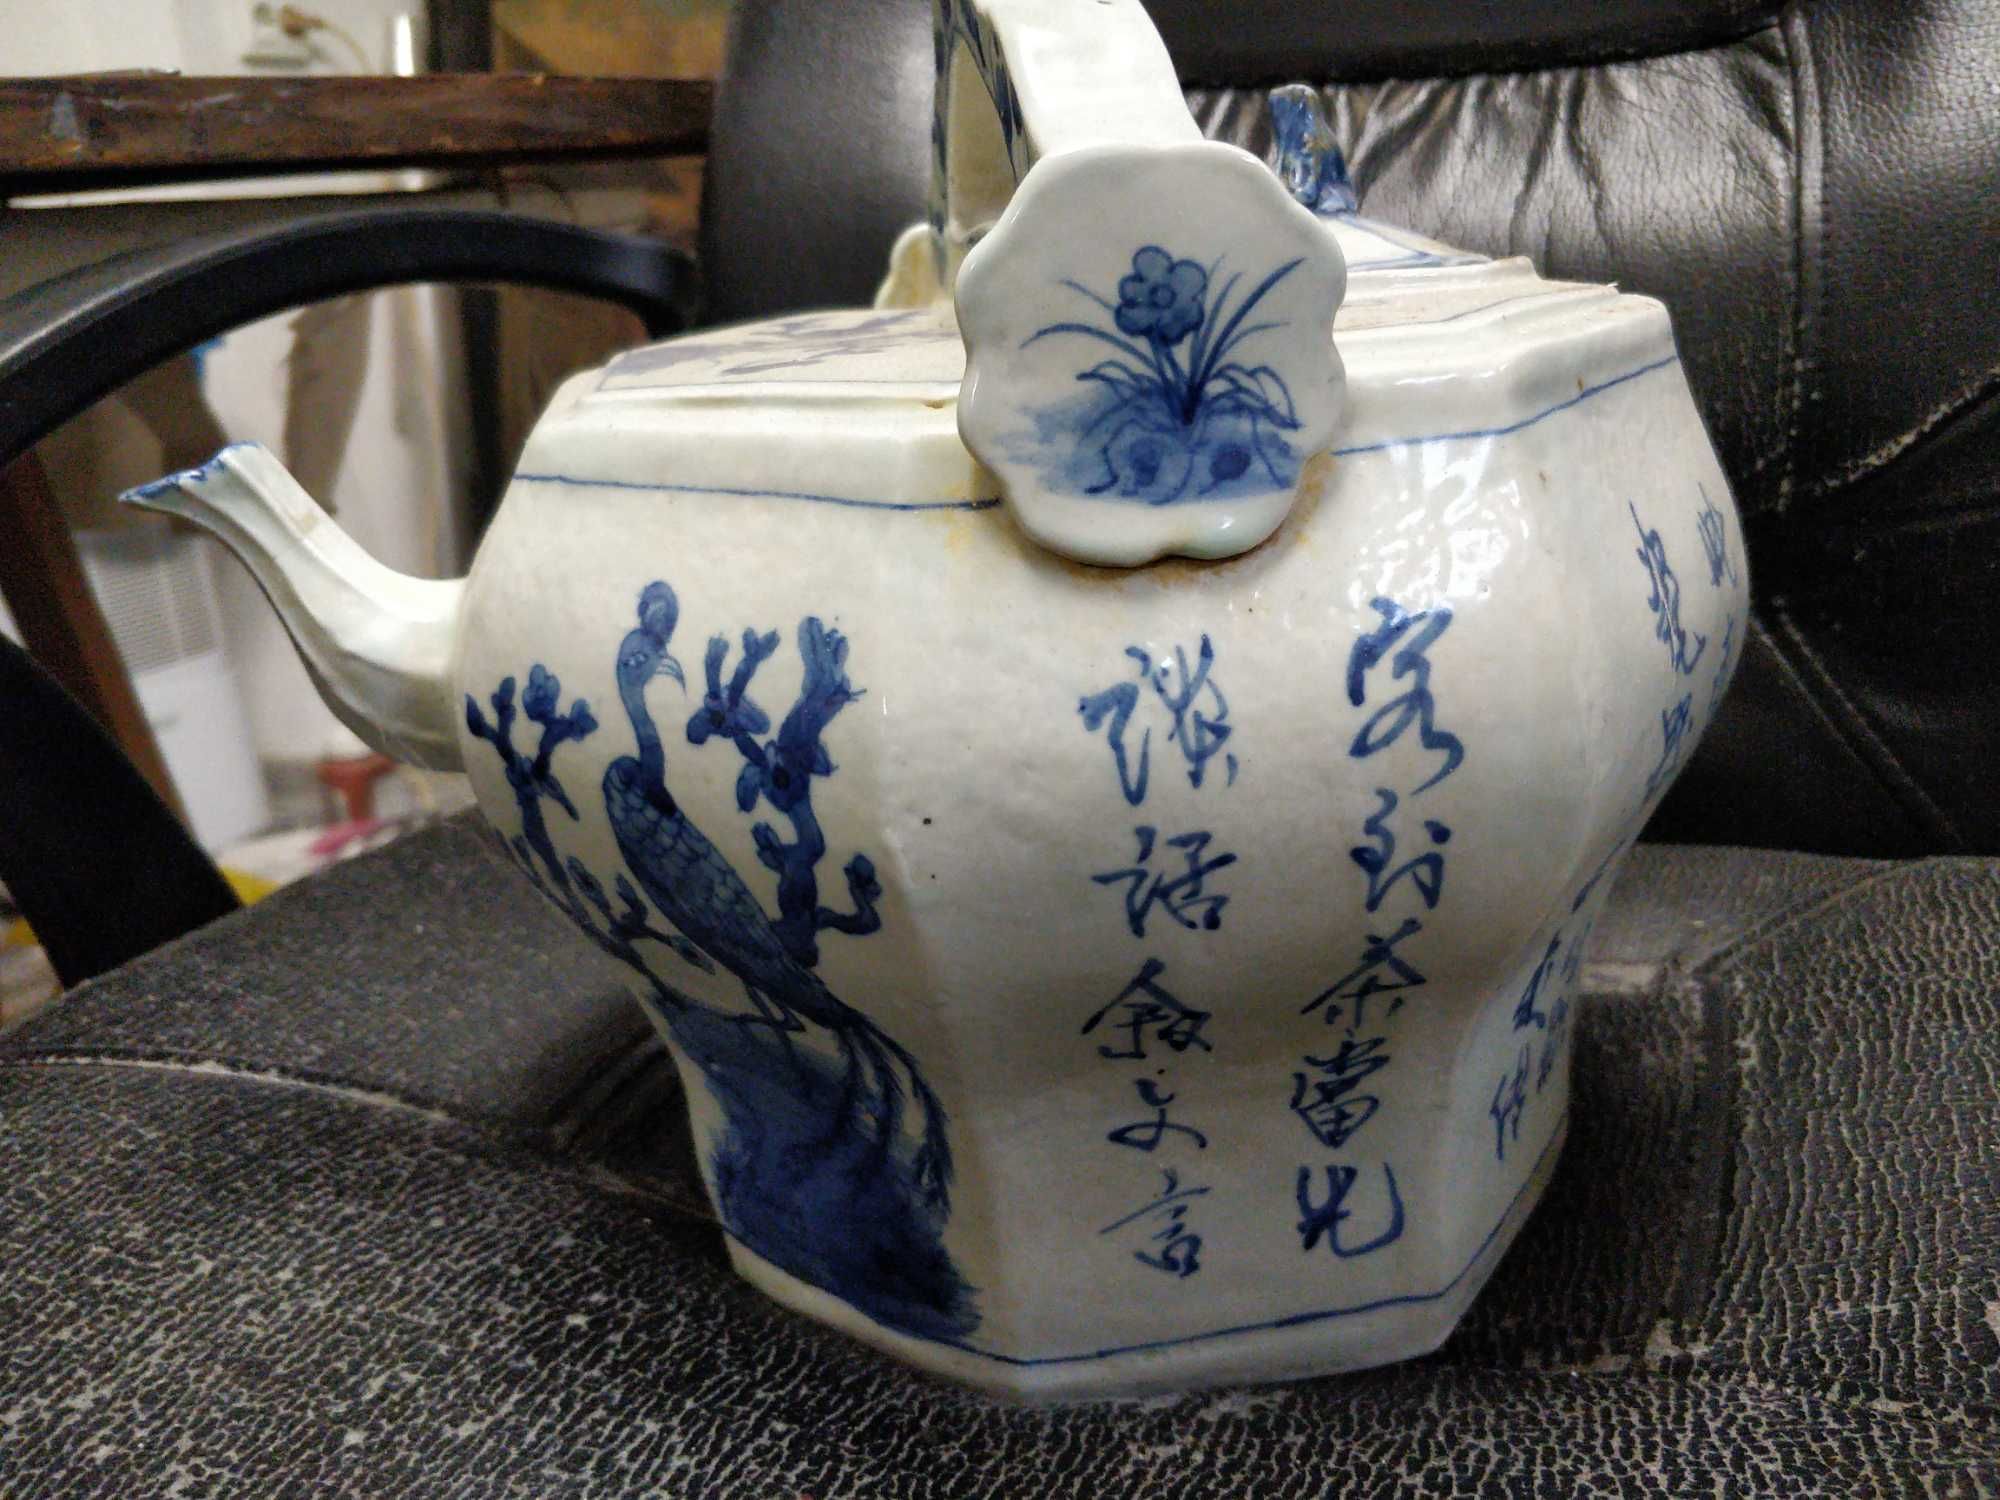 Vechi ceainic chinezesc sec. XIX